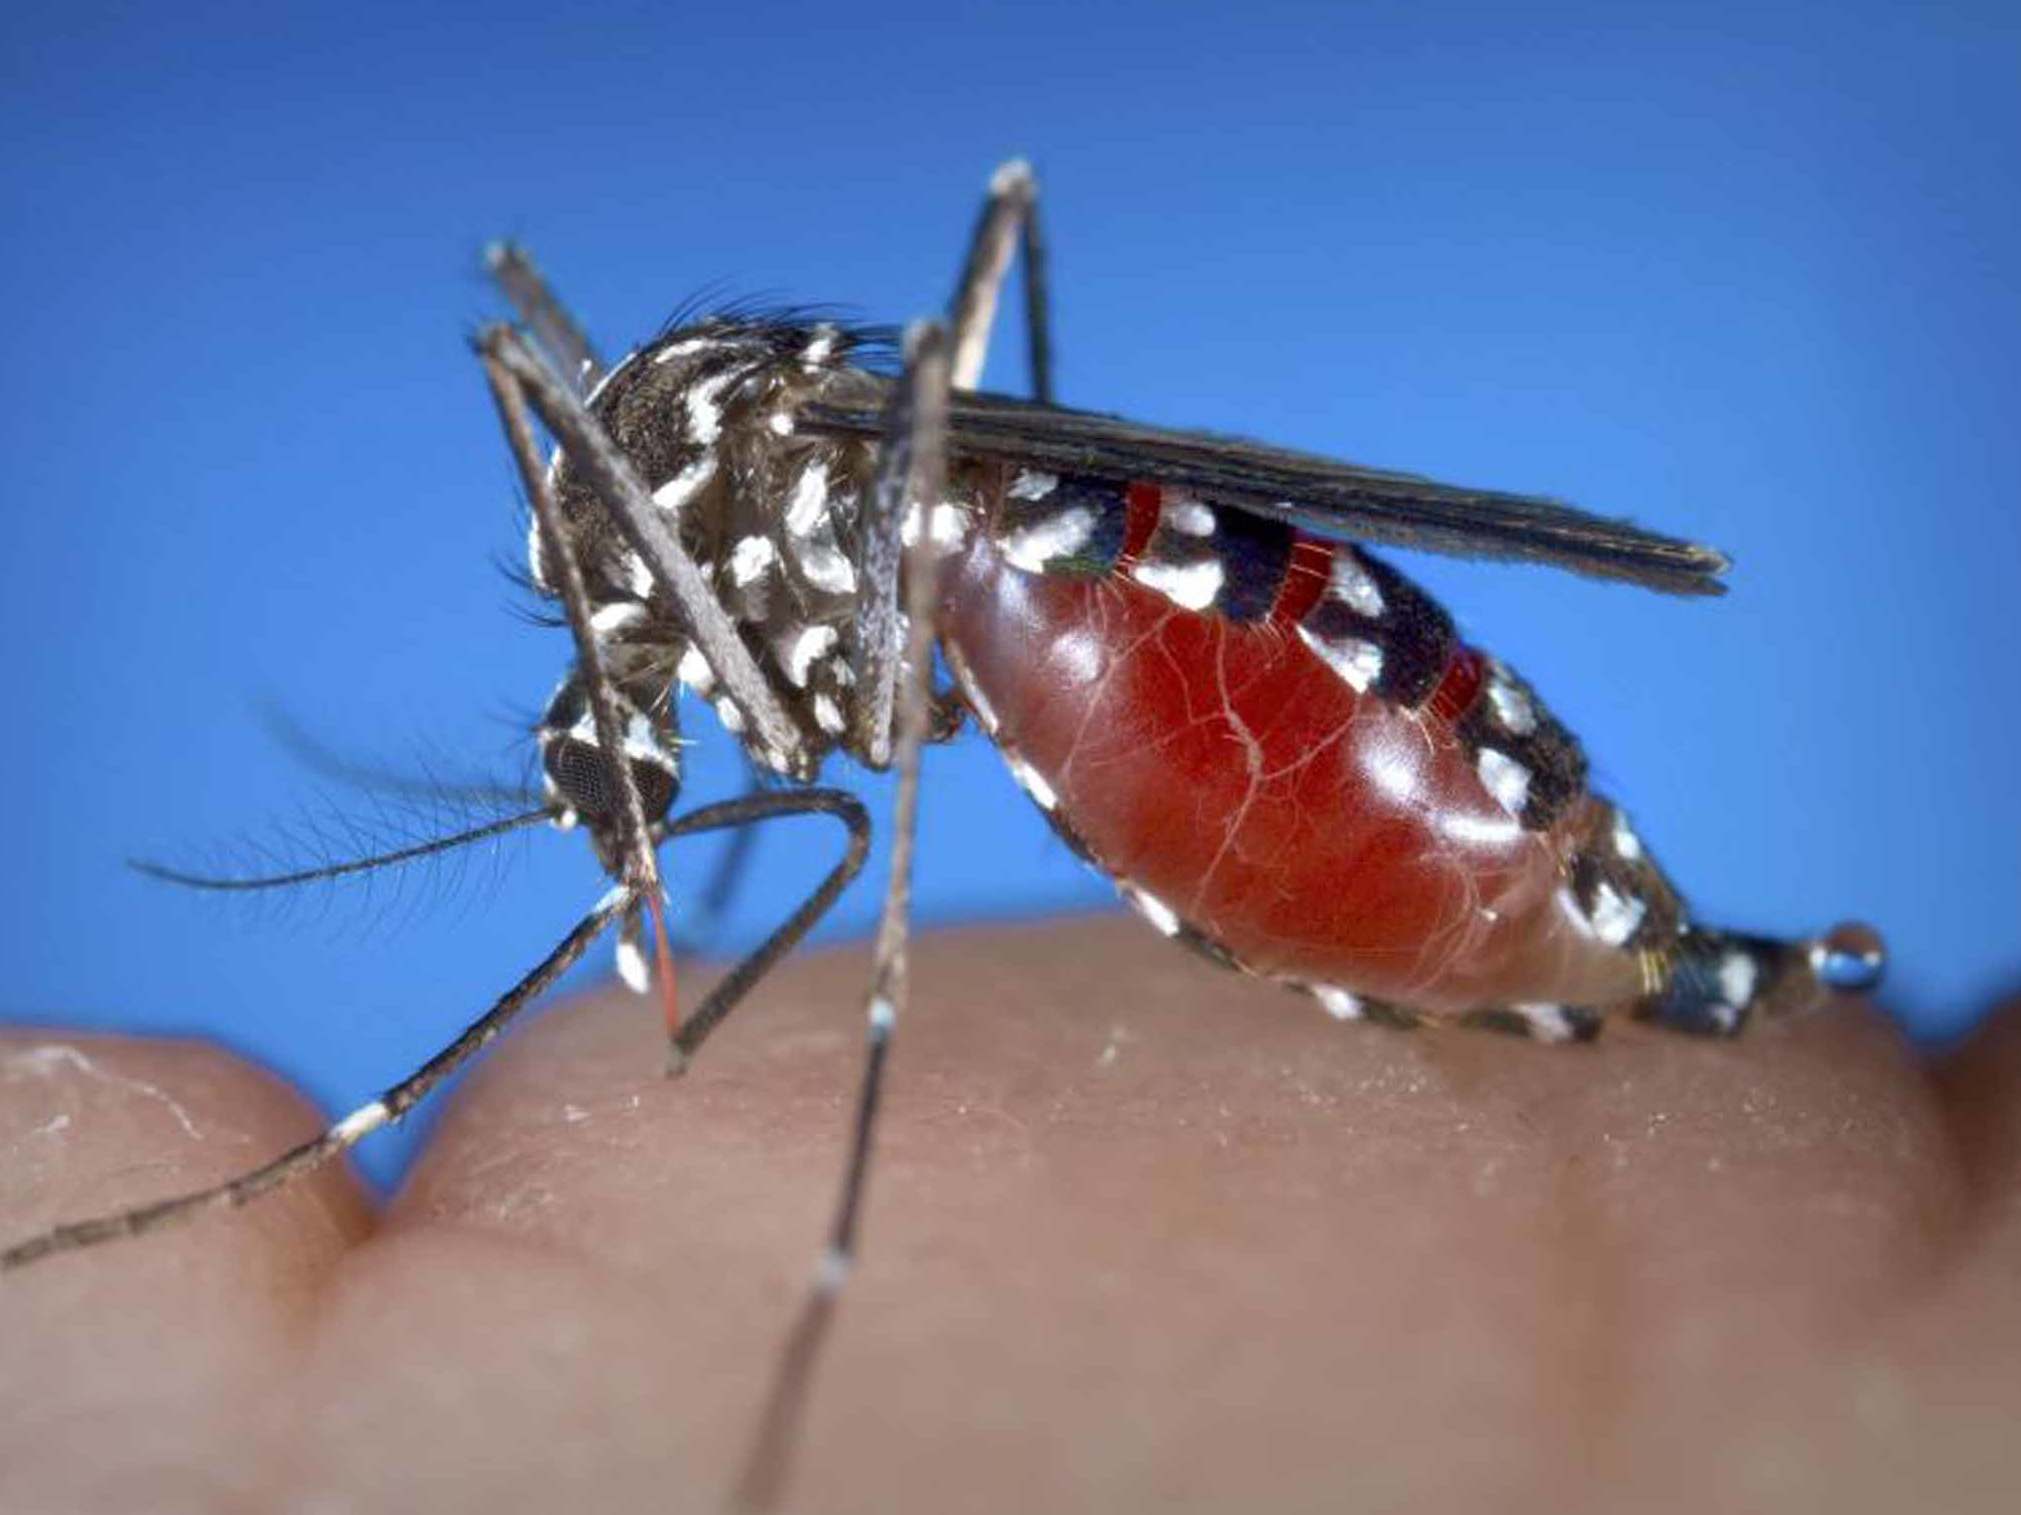 Once bitten: mosquitoes spread chikungunya virus